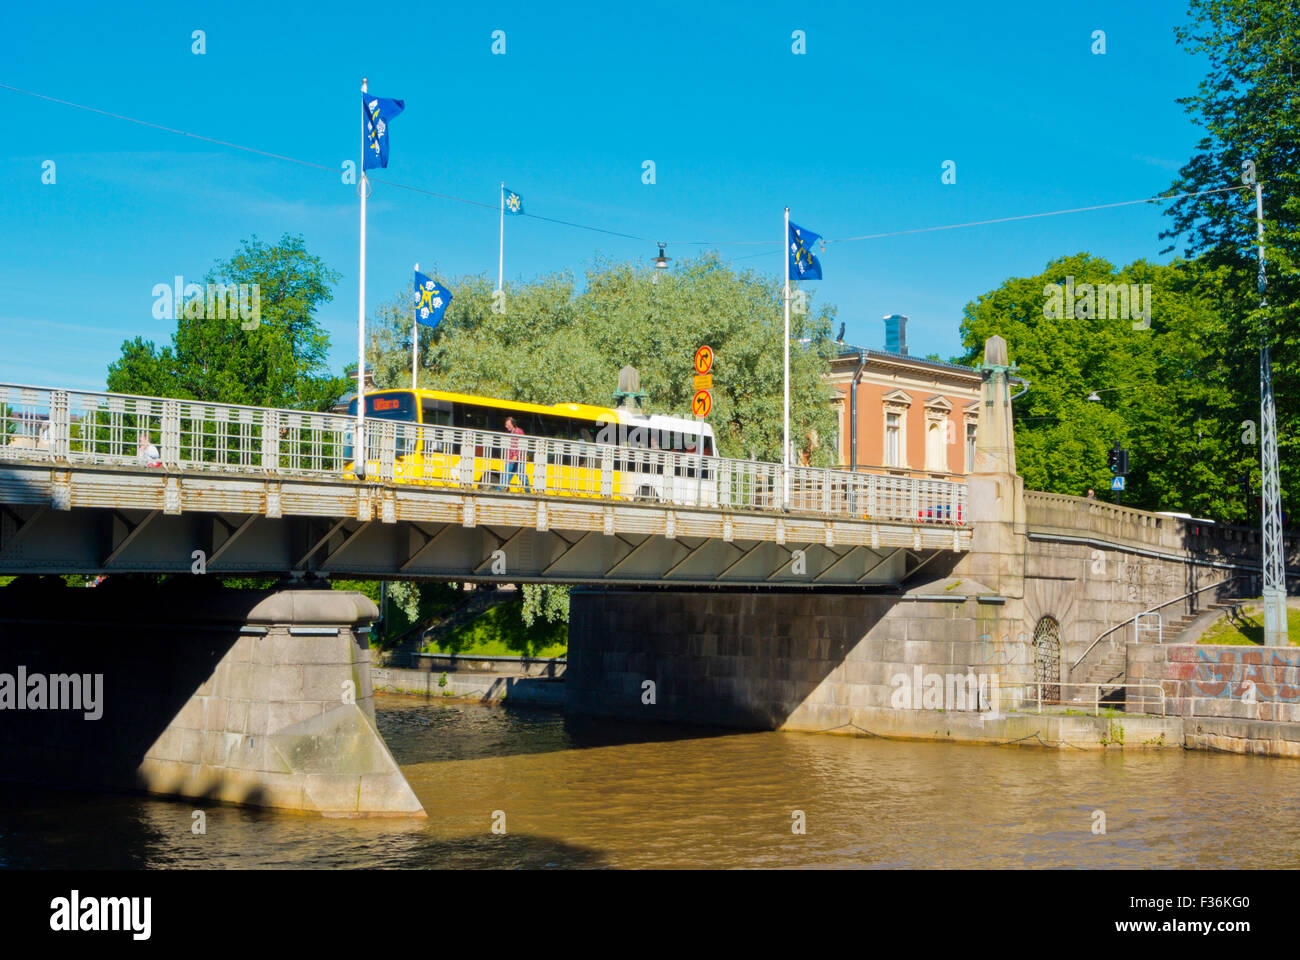 Auransilta, Aura bridge, Turku, Finland Stock Photo